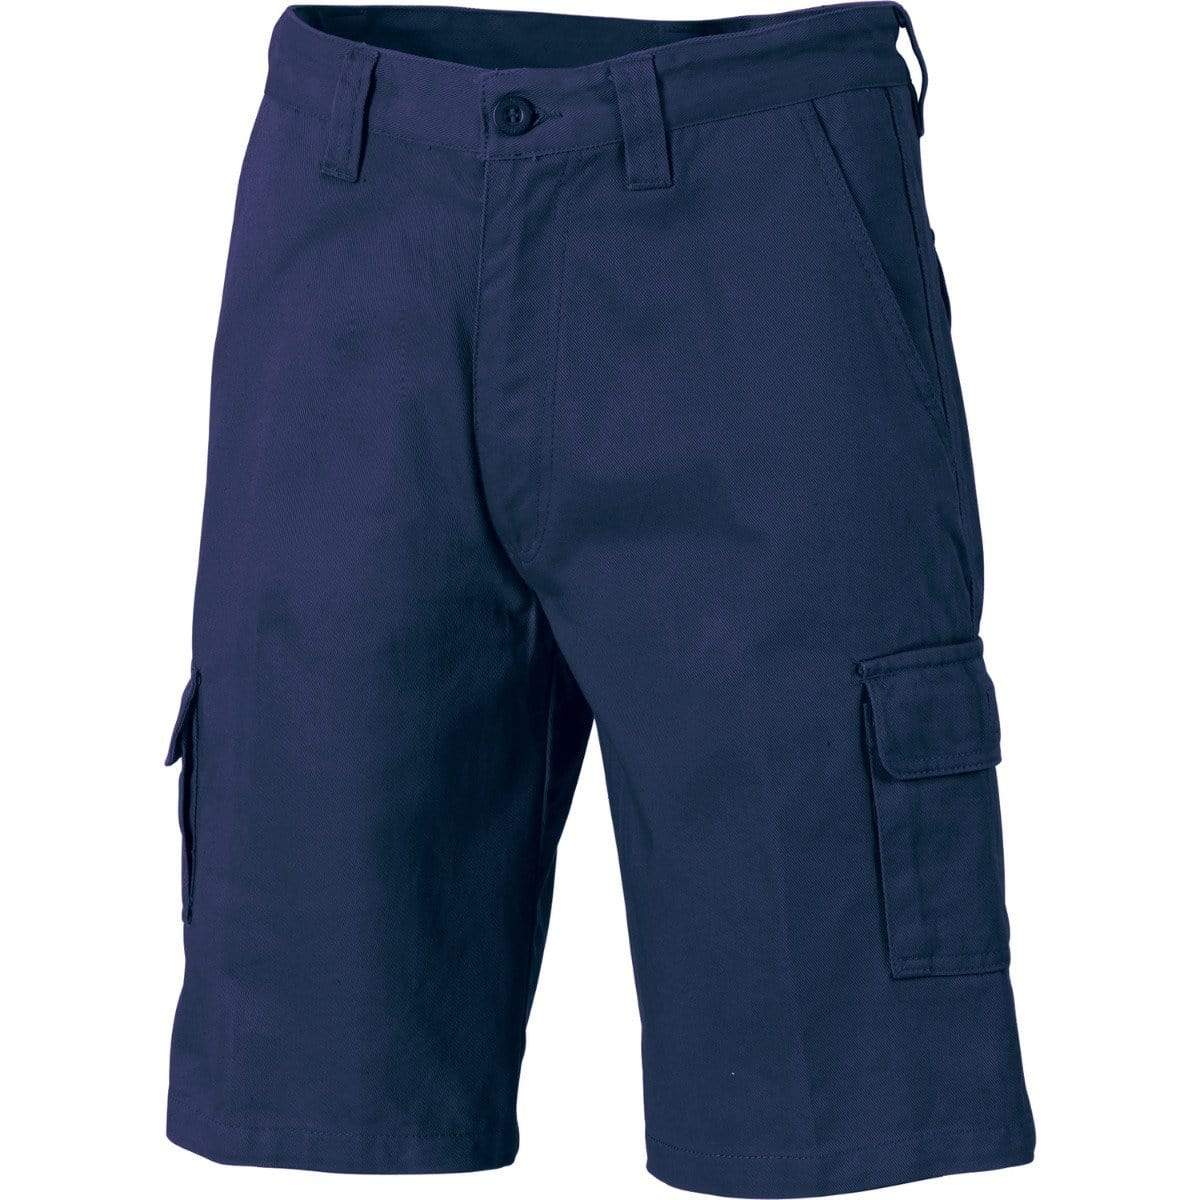 Dnc Workwear Cotton Drill Cargo Shorts - 3302 Work Wear DNC Workwear Navy 72R 